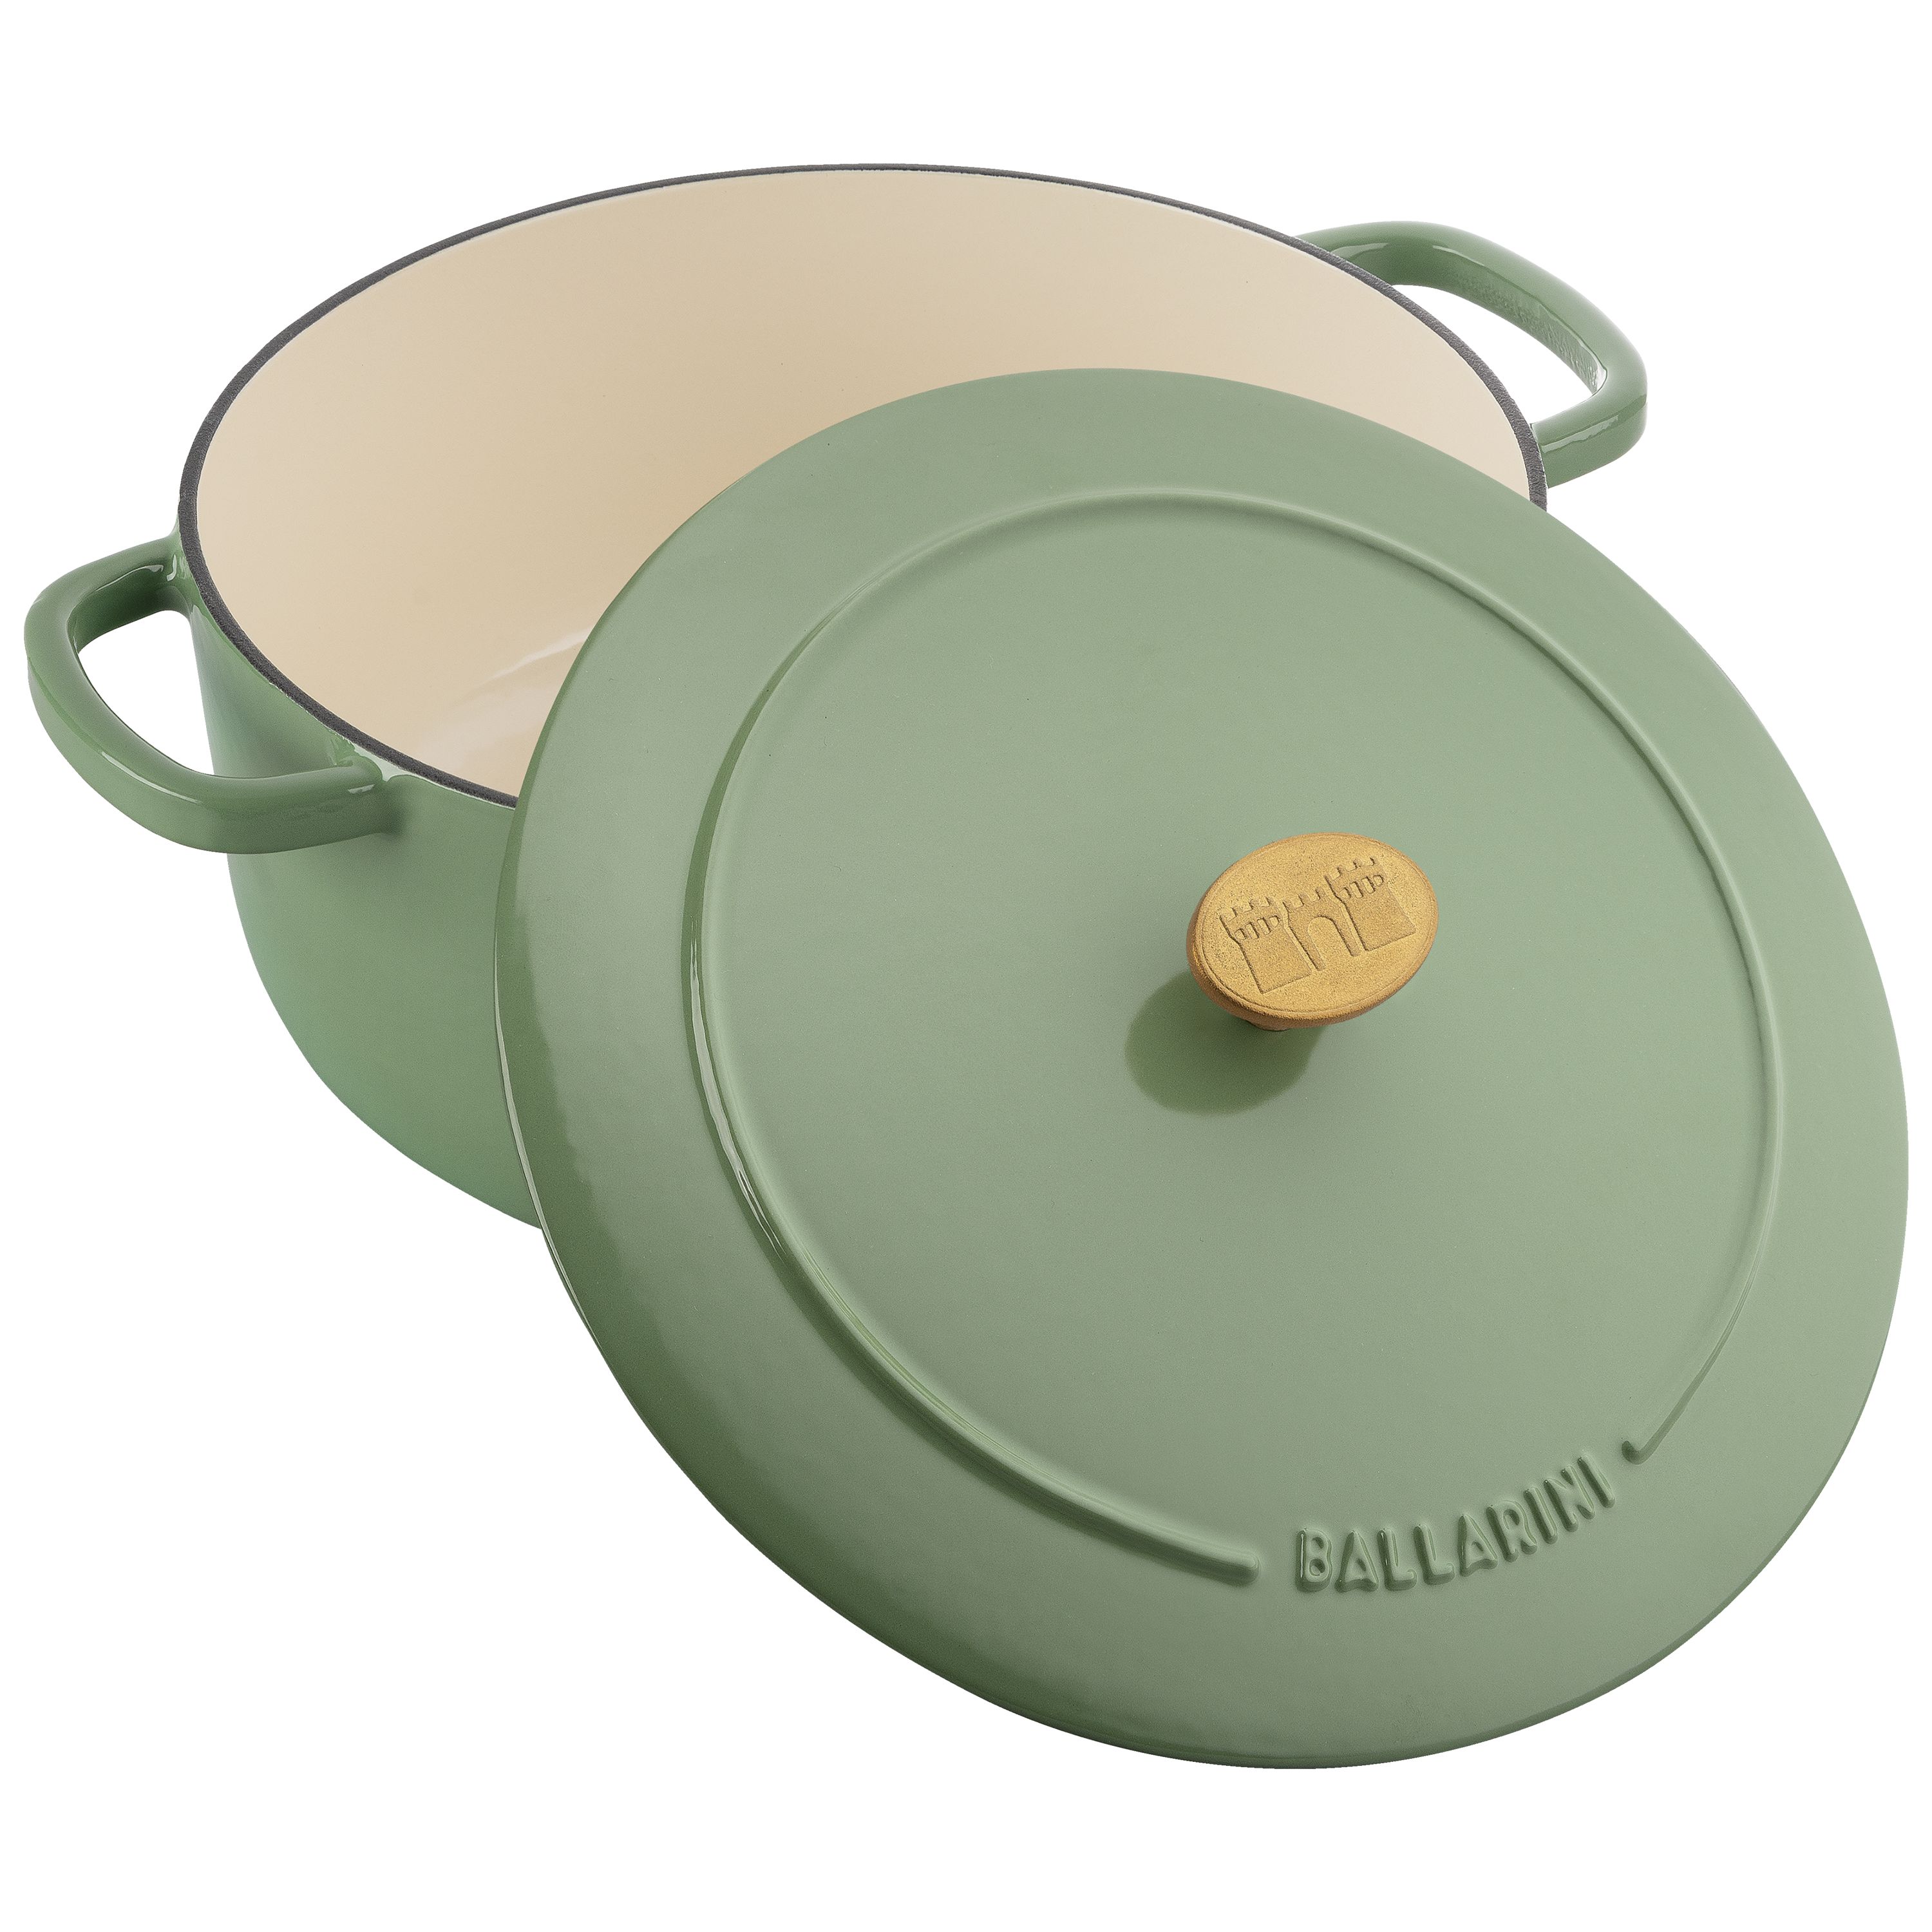 Bellamonte Cooking pot 4 l - Ballarini 75003-541-0